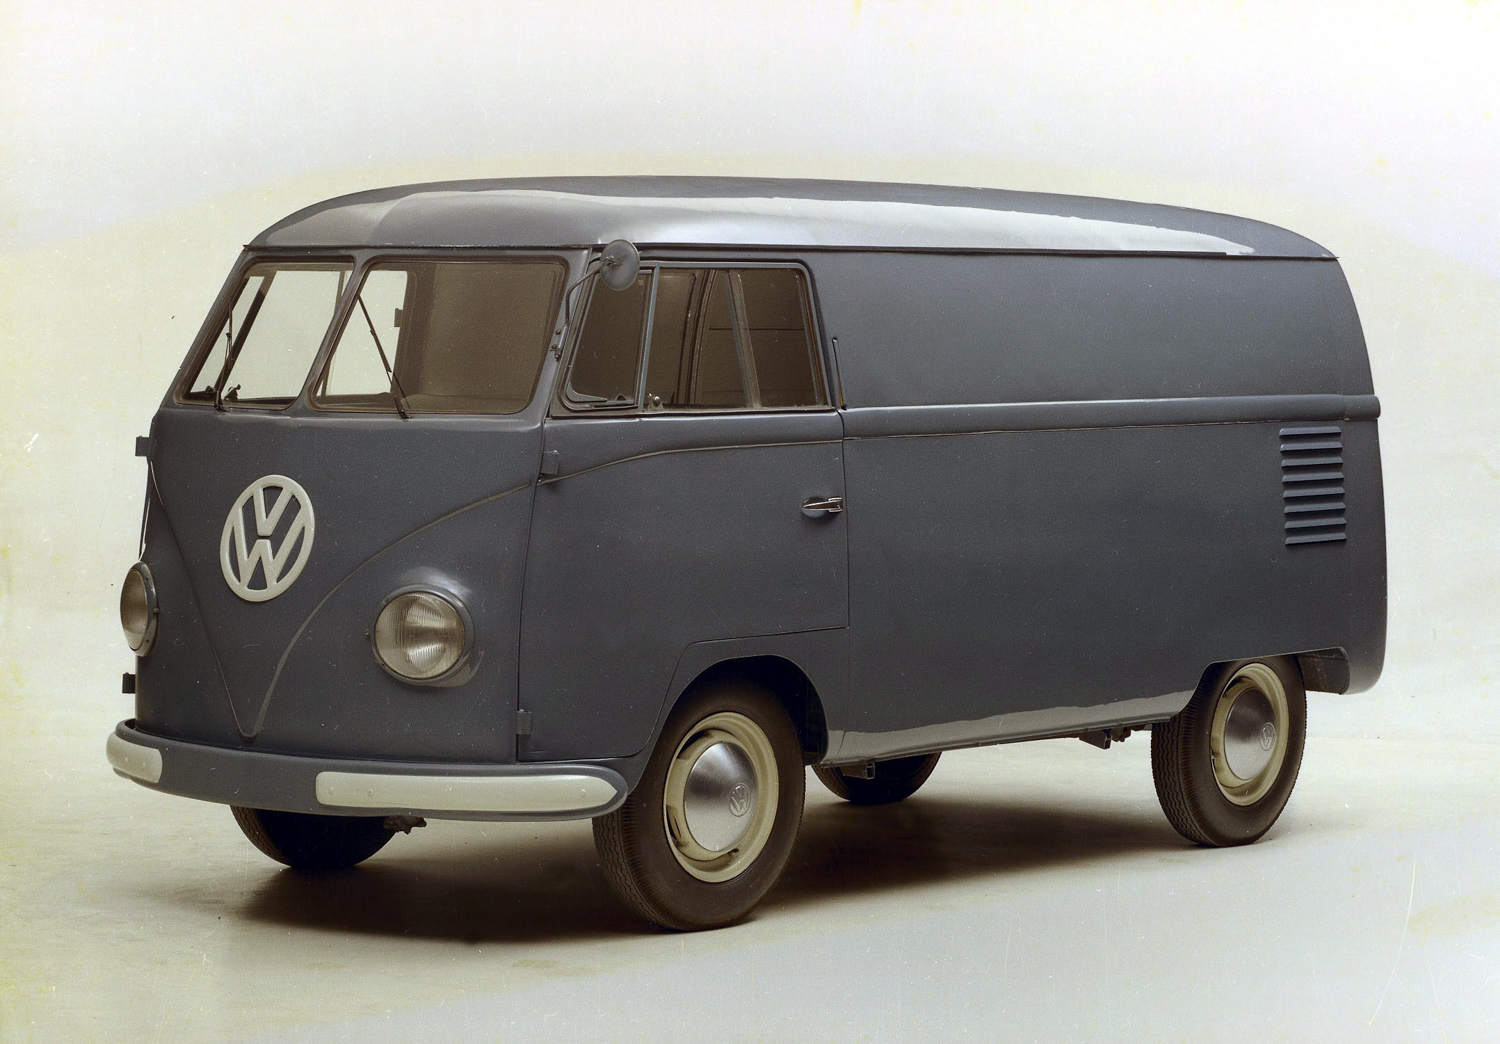 VW Kombi sets world record at auction - Car News